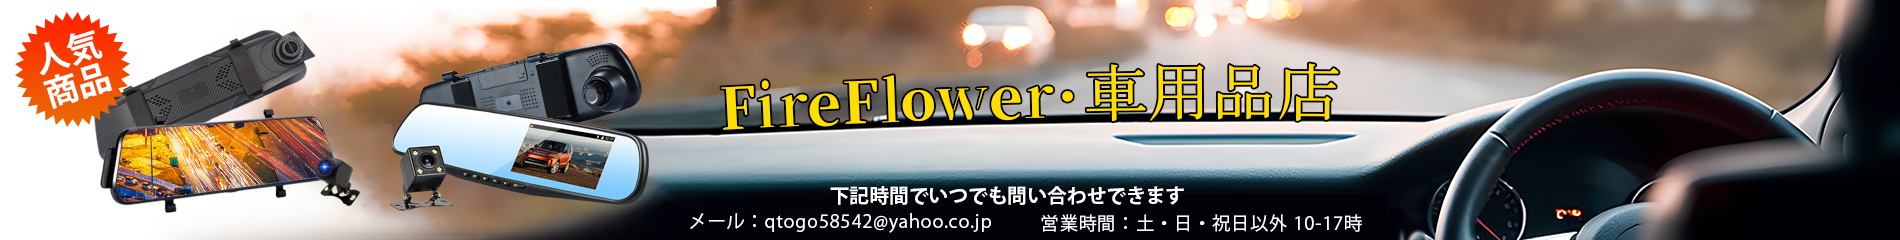 FireFlower・車用品店 ヘッダー画像